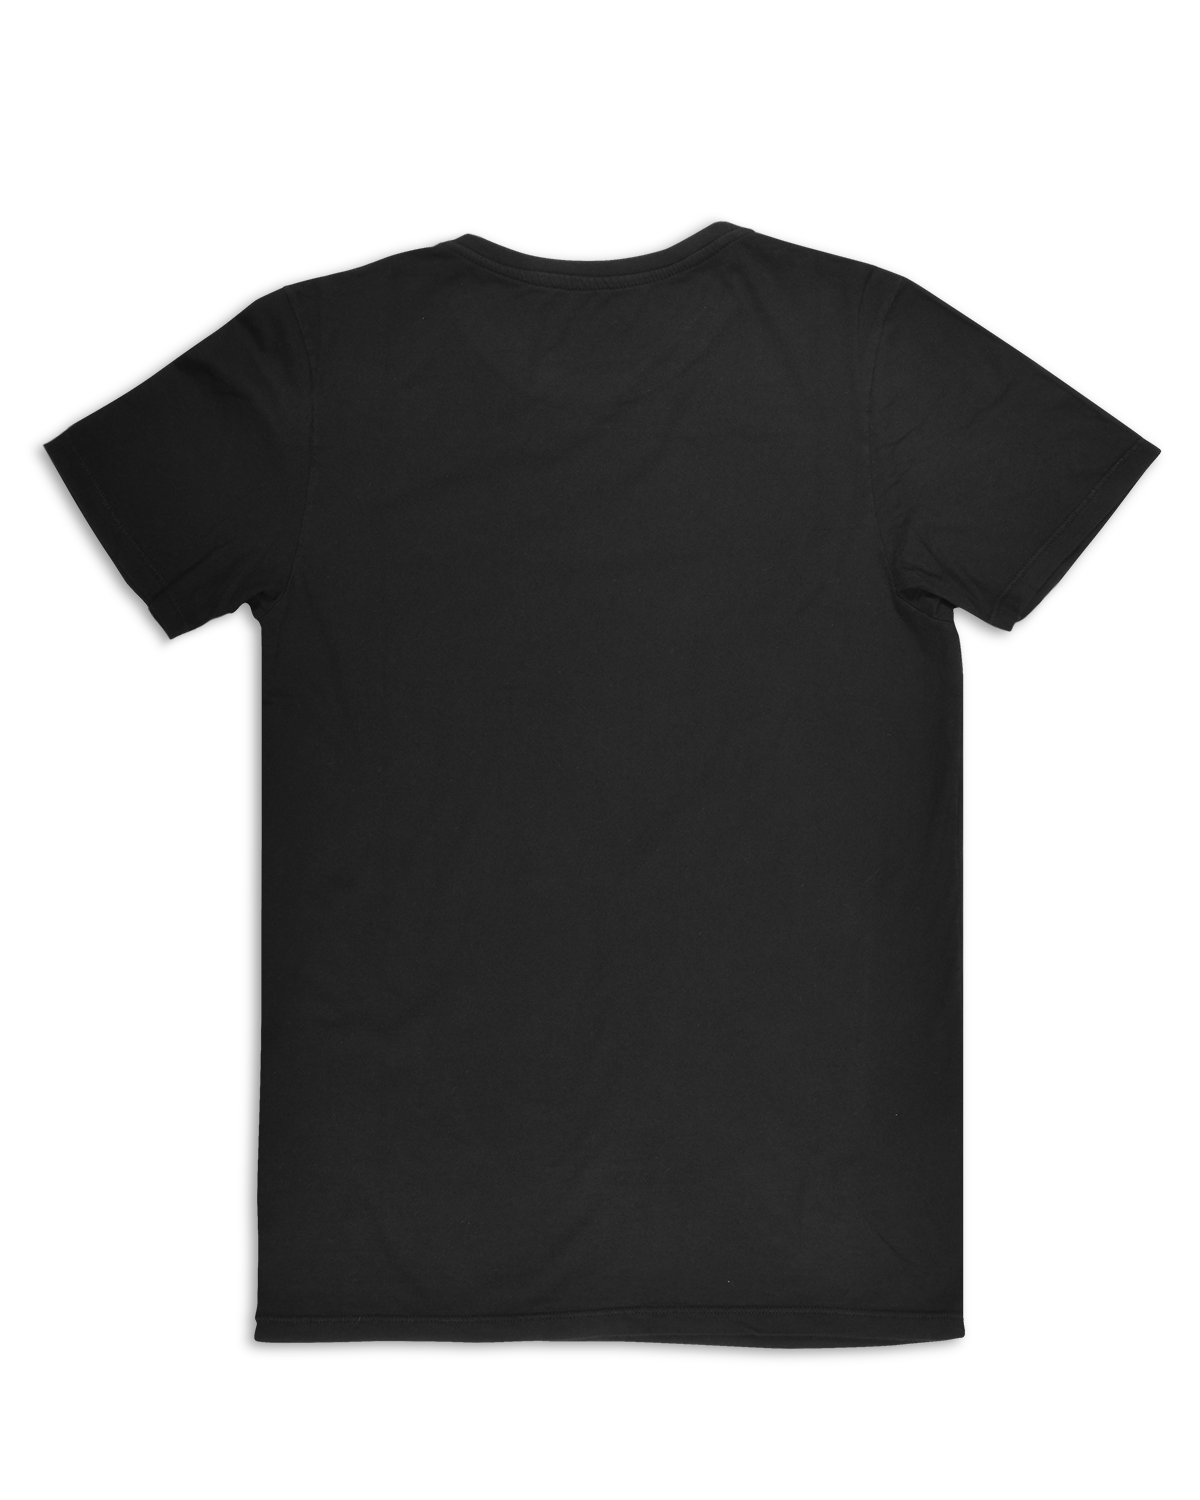 Shirt Black Transparent Image